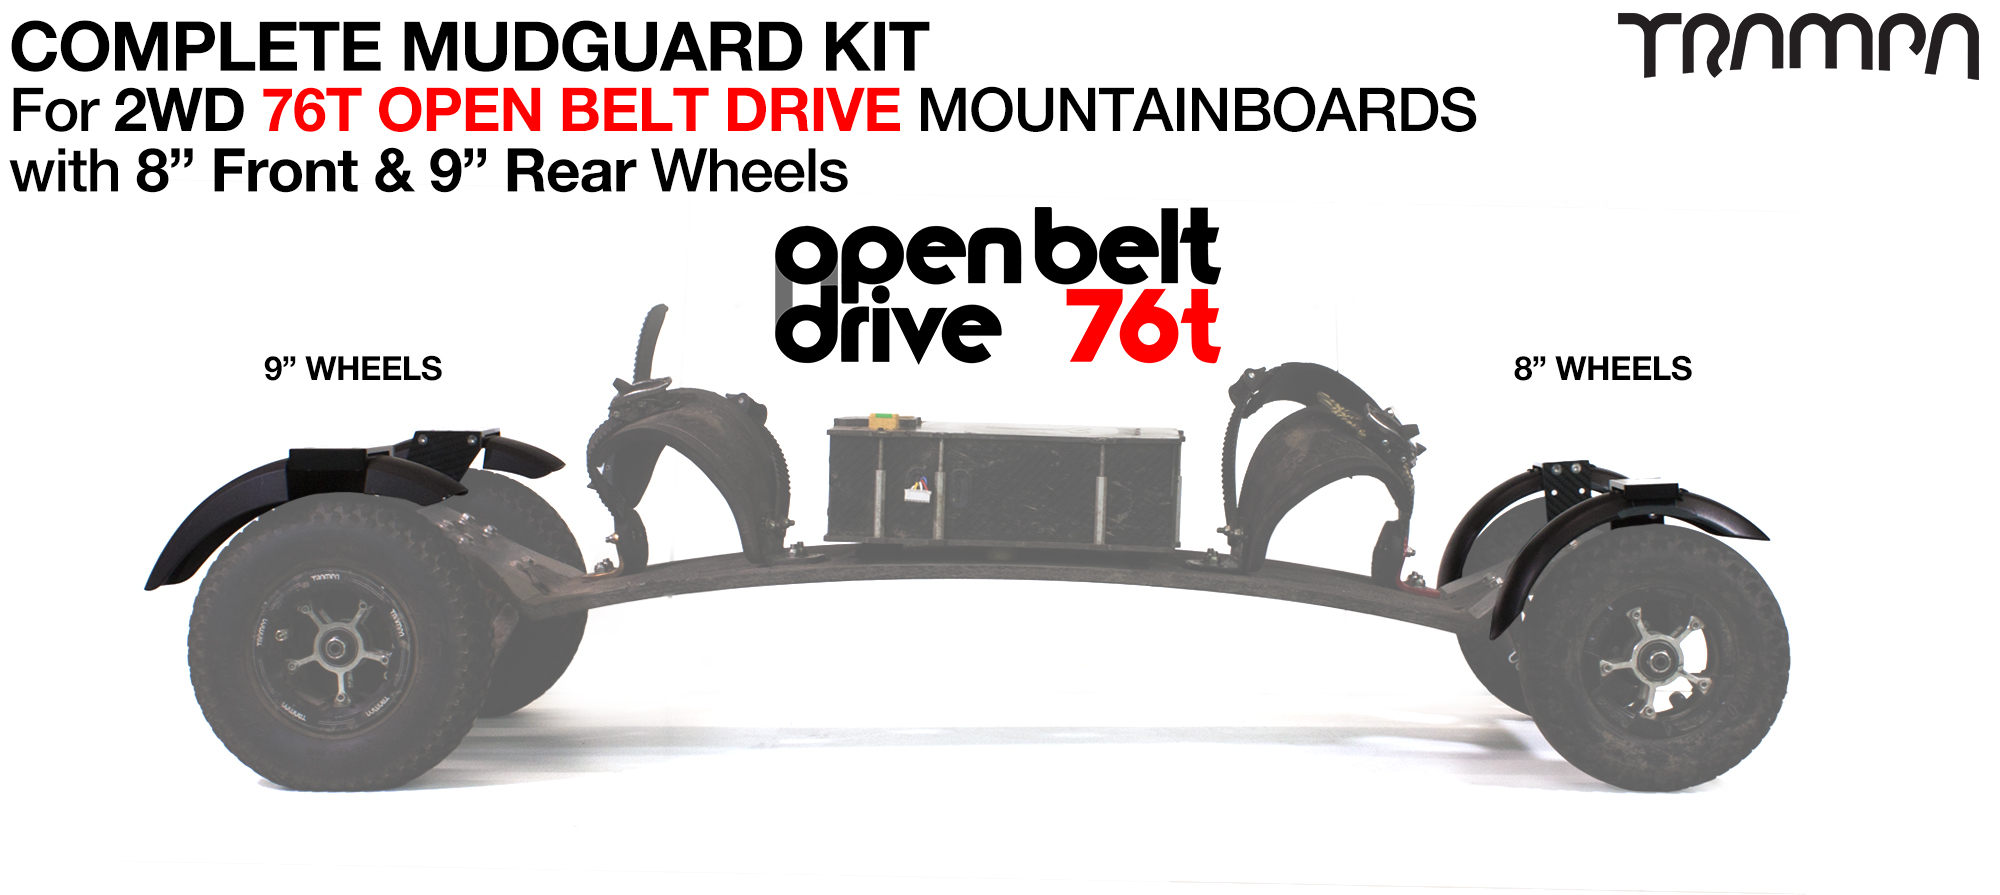 Full Mudguard Kit for 2WD 76T OPEN BELT DRIVE Mountainboards - 8" & 9" Wheels 